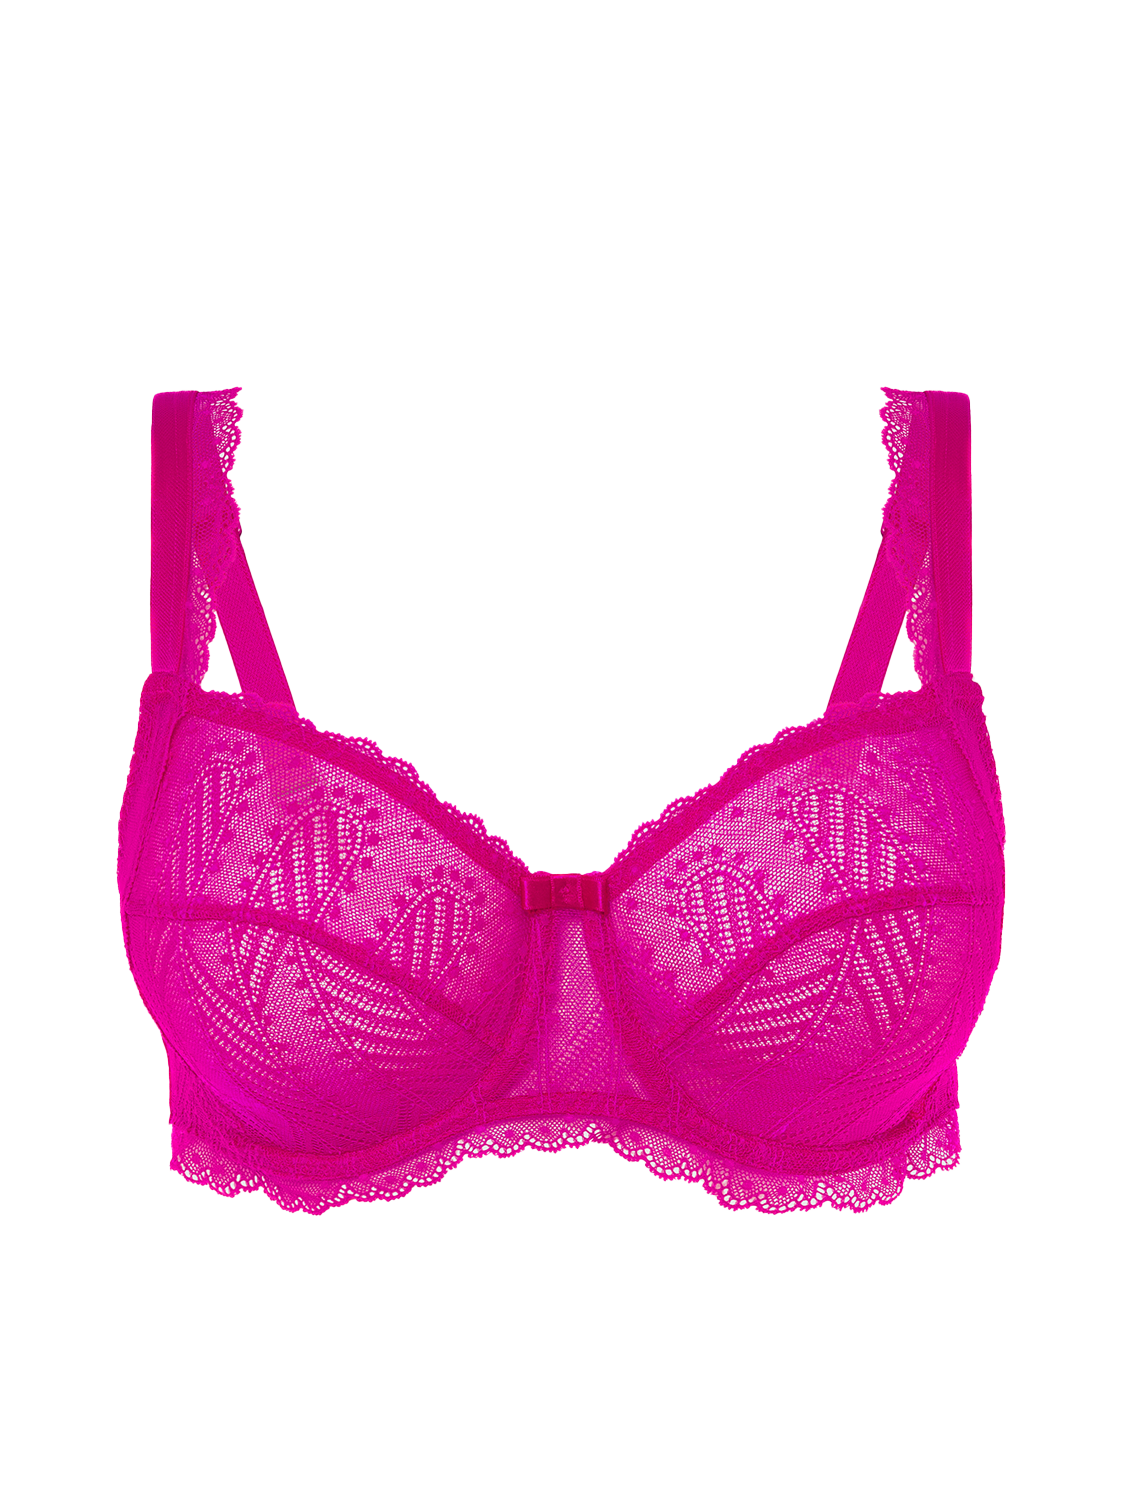 Squared neckline full cup bra - Hibiscus Pink